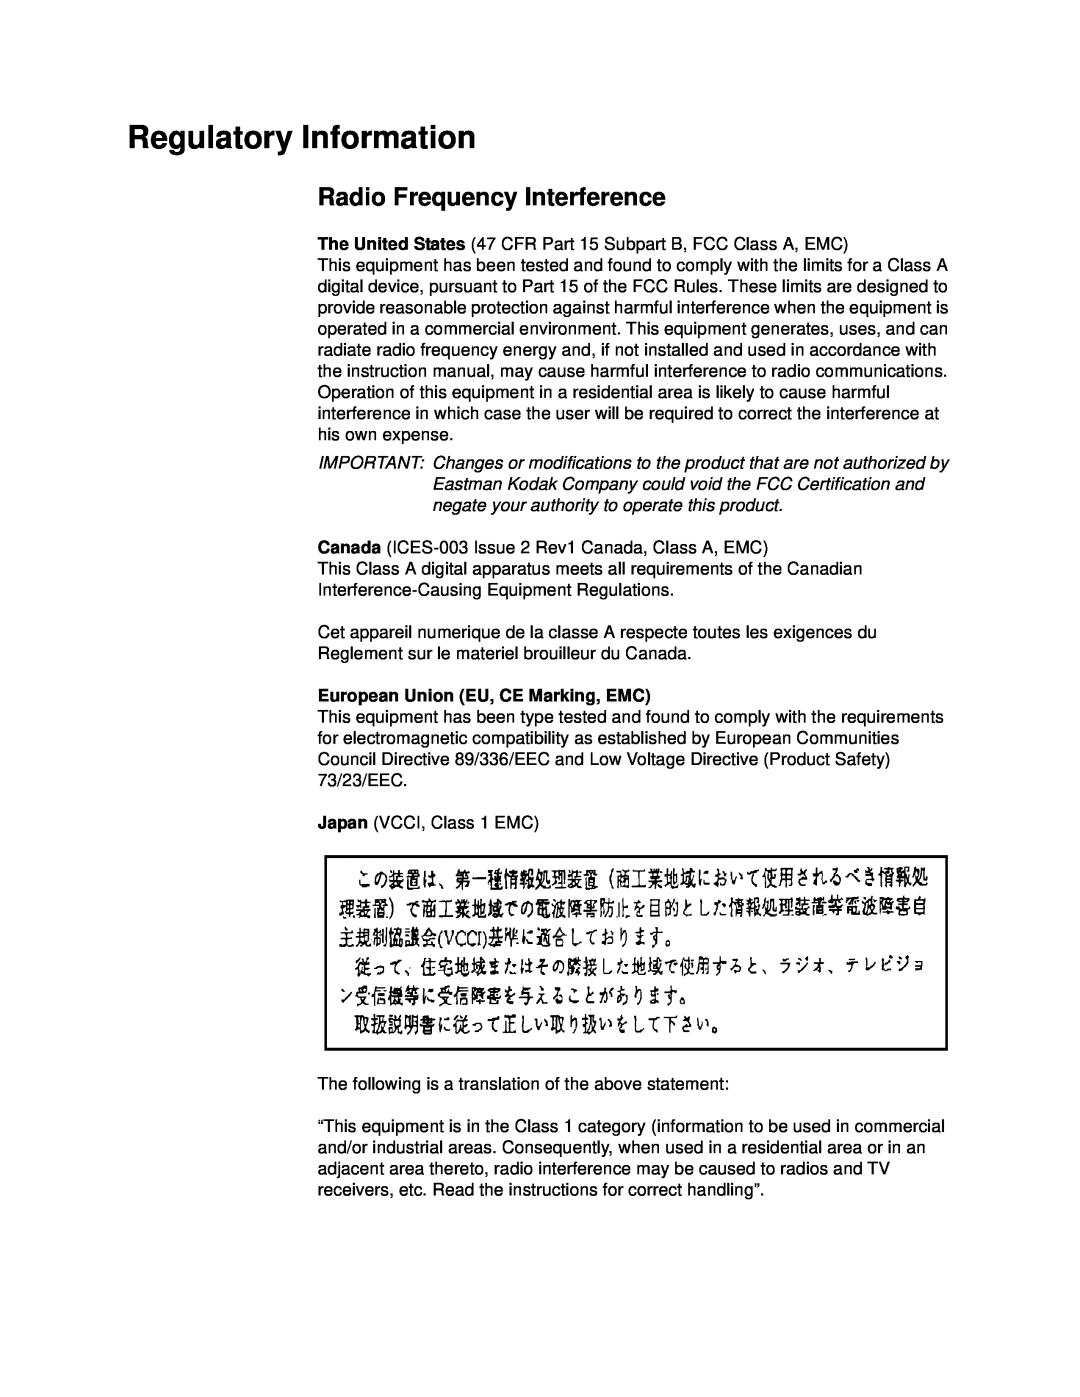 Kodak 20R manual Regulatory Information, Radio Frequency Interference, European Union EU, CE Marking, EMC 